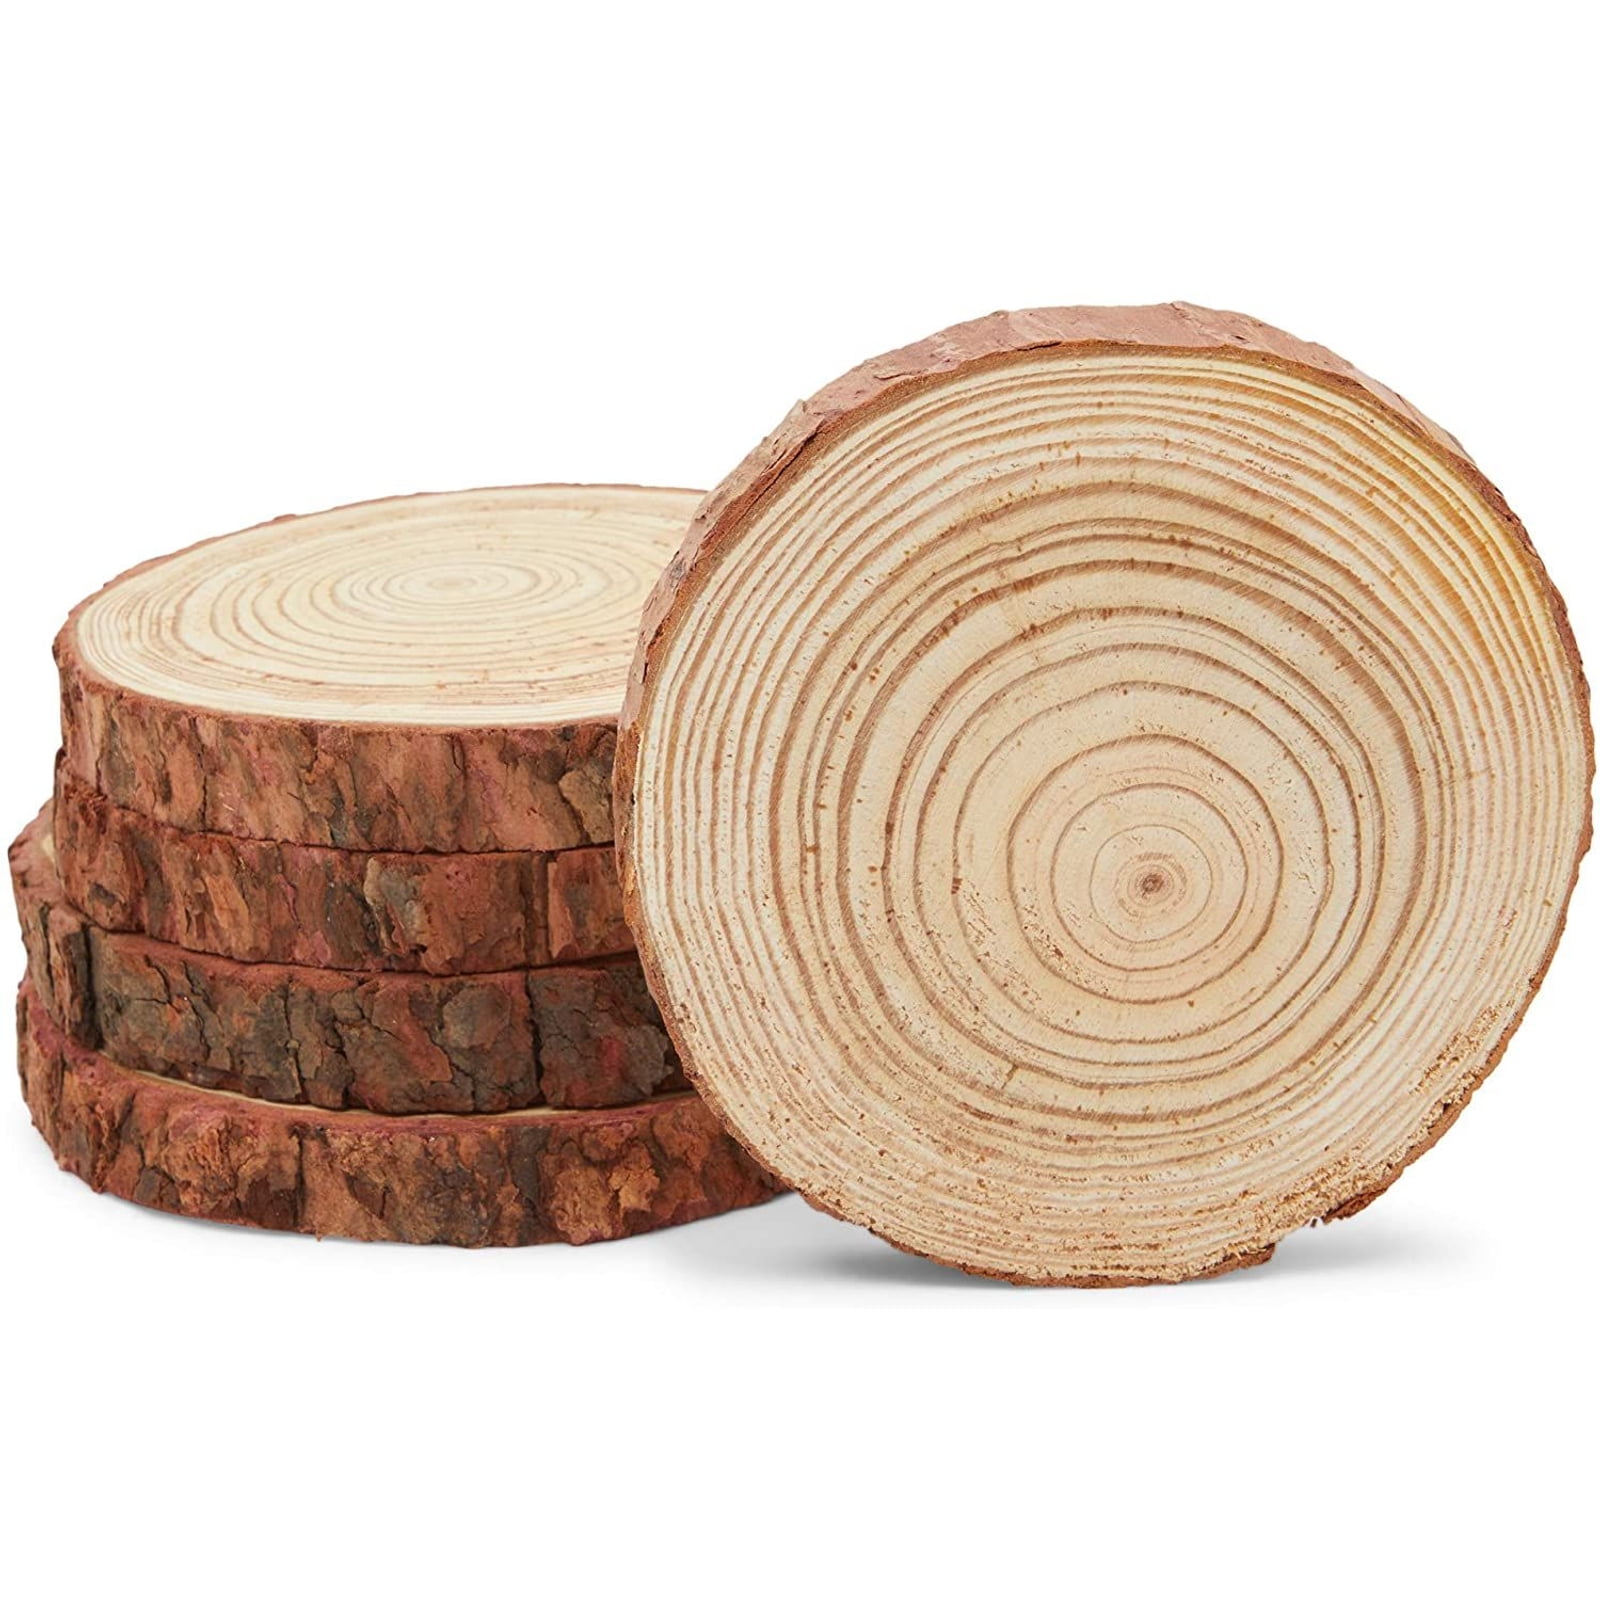 1 pcs DIY Crafts Round Wood Slices Circles with Tree Bark Log Discs Decor XS 